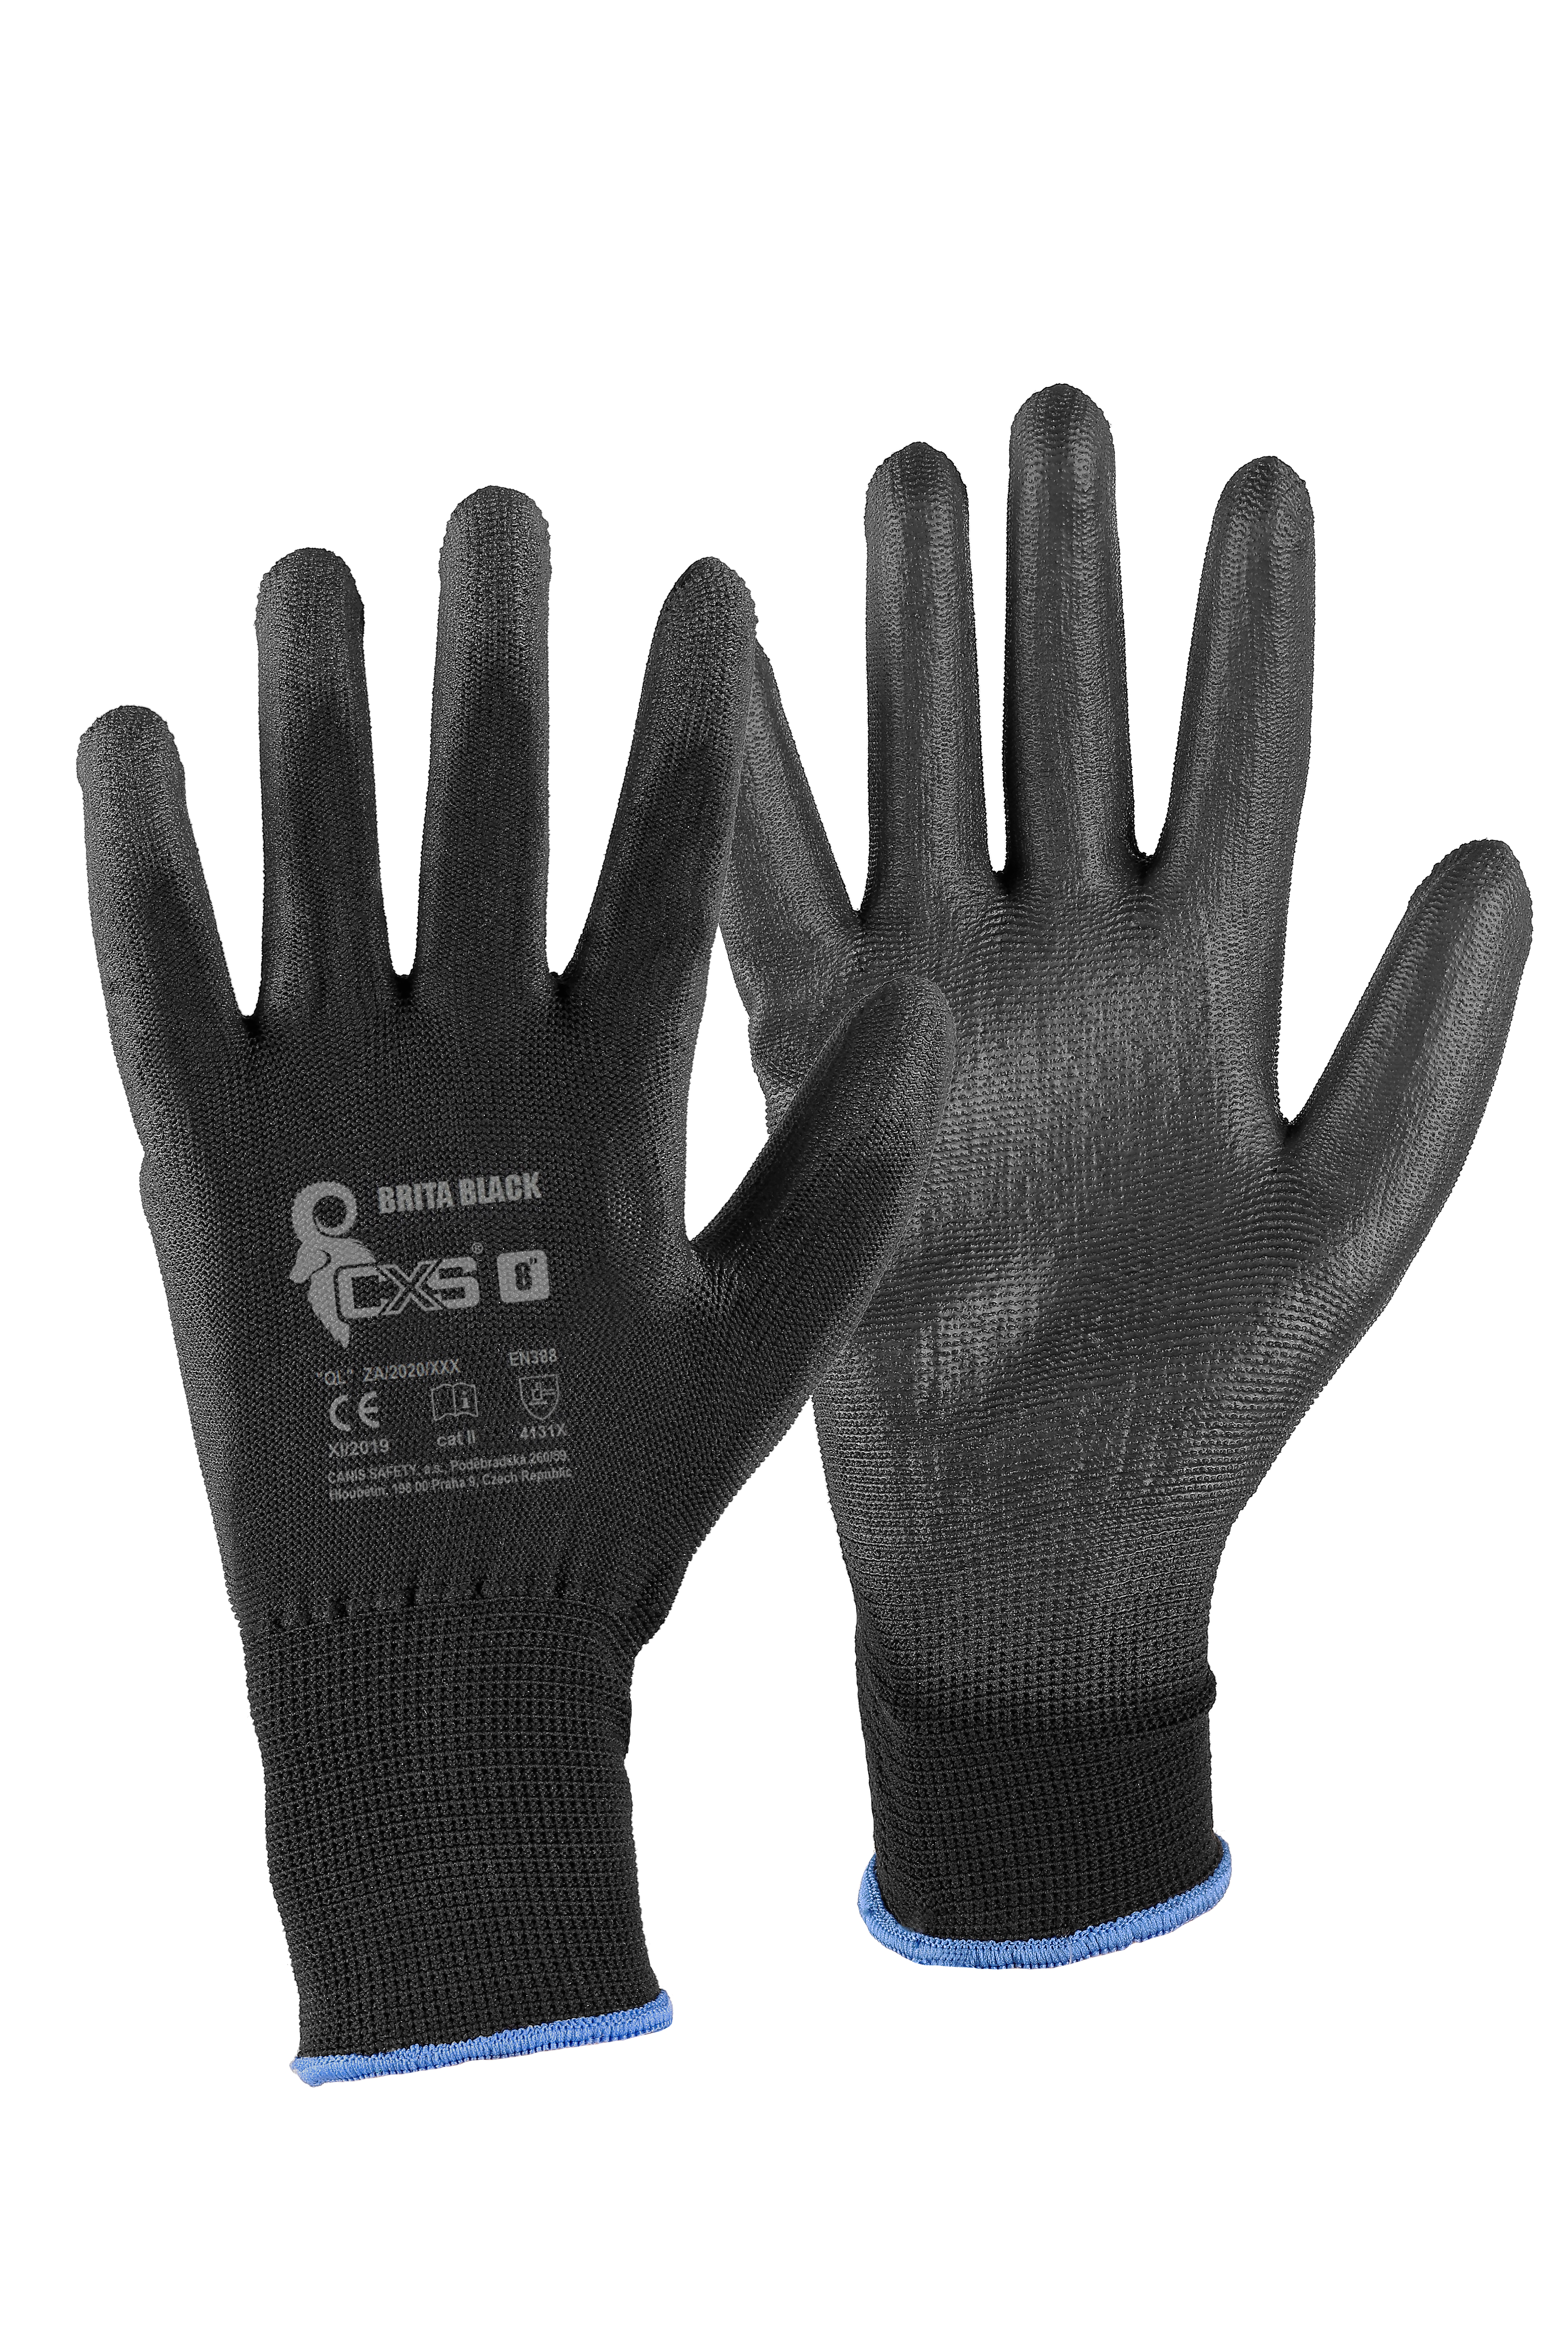 rukavice BRITA BLACK, s PU dlaní a úpletem, velikost 10 0.02 Kg TOP Sklad4 606049 317